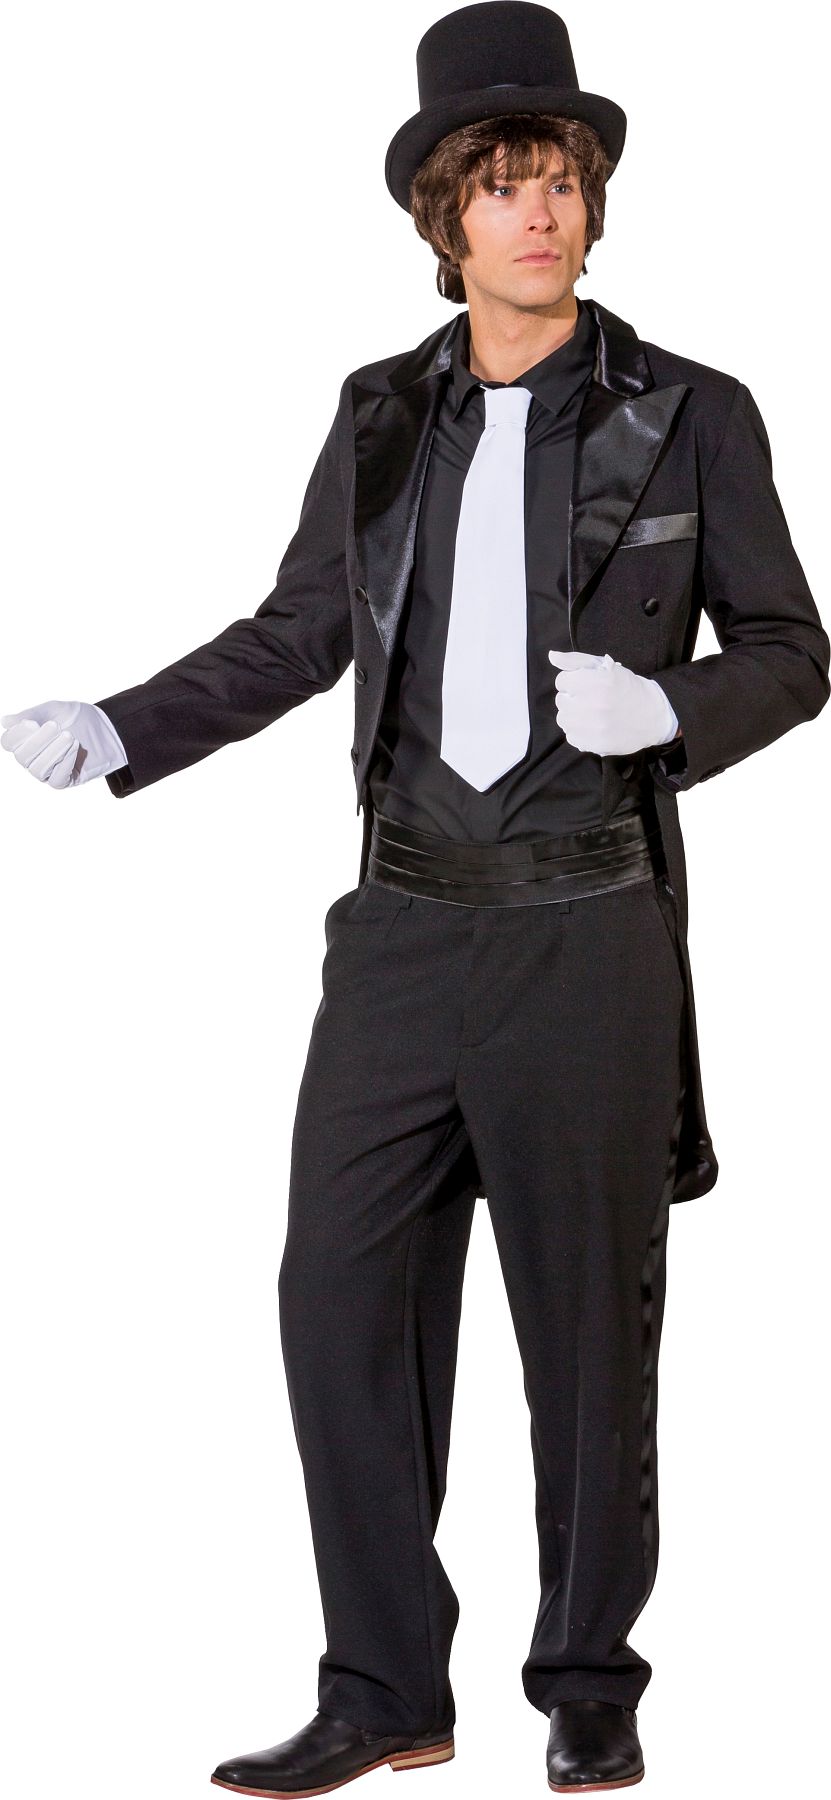 Men's tailcoat with satin shawl collar, black